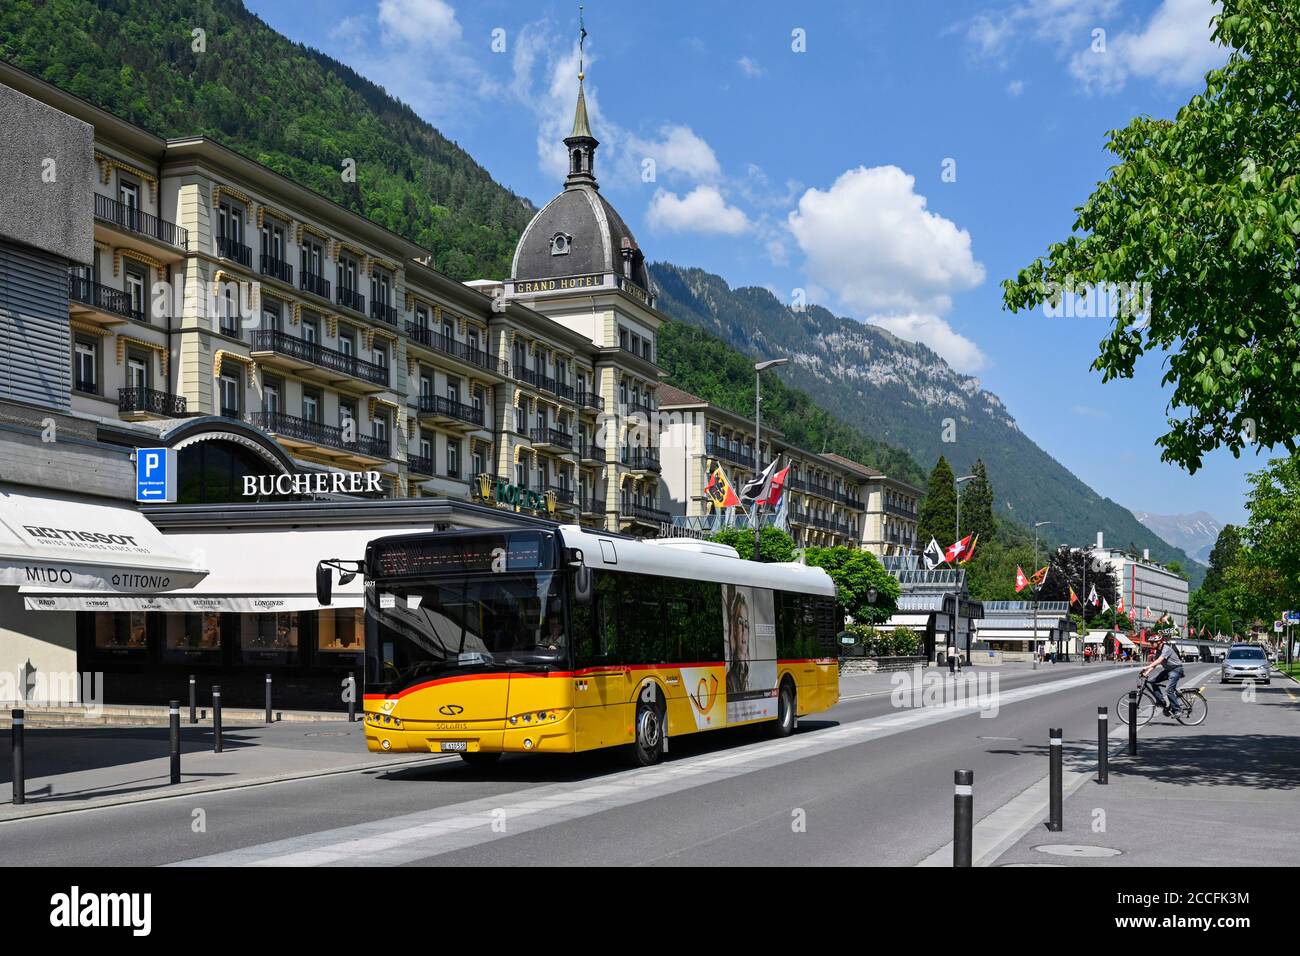 Postbus with the Victoria Jungfrau Grand Hotel in the background, Interlaken, Switzerland Stock Photo